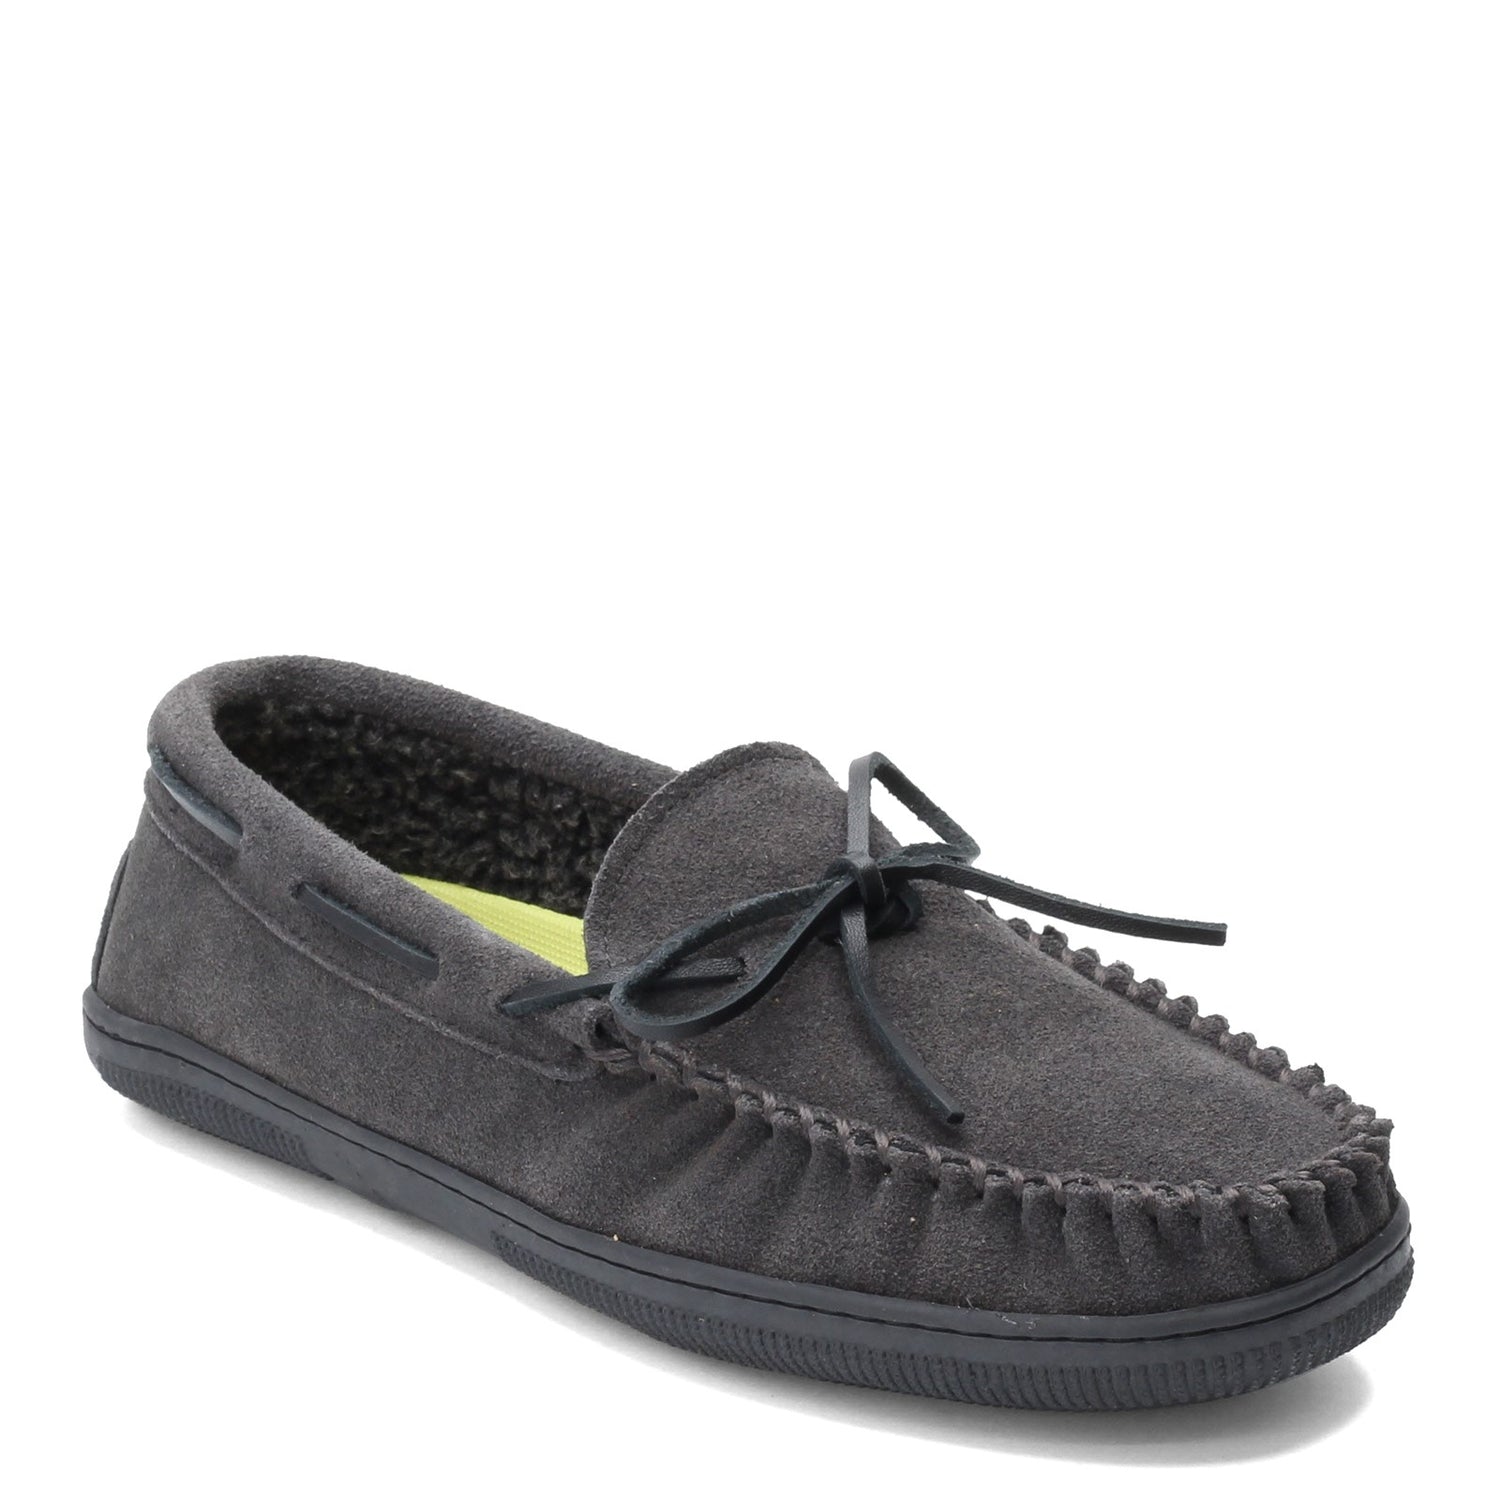 Peltz Shoes  Men's Florsheim Cozzy Moc Toe Slipper GRAY 12184-061